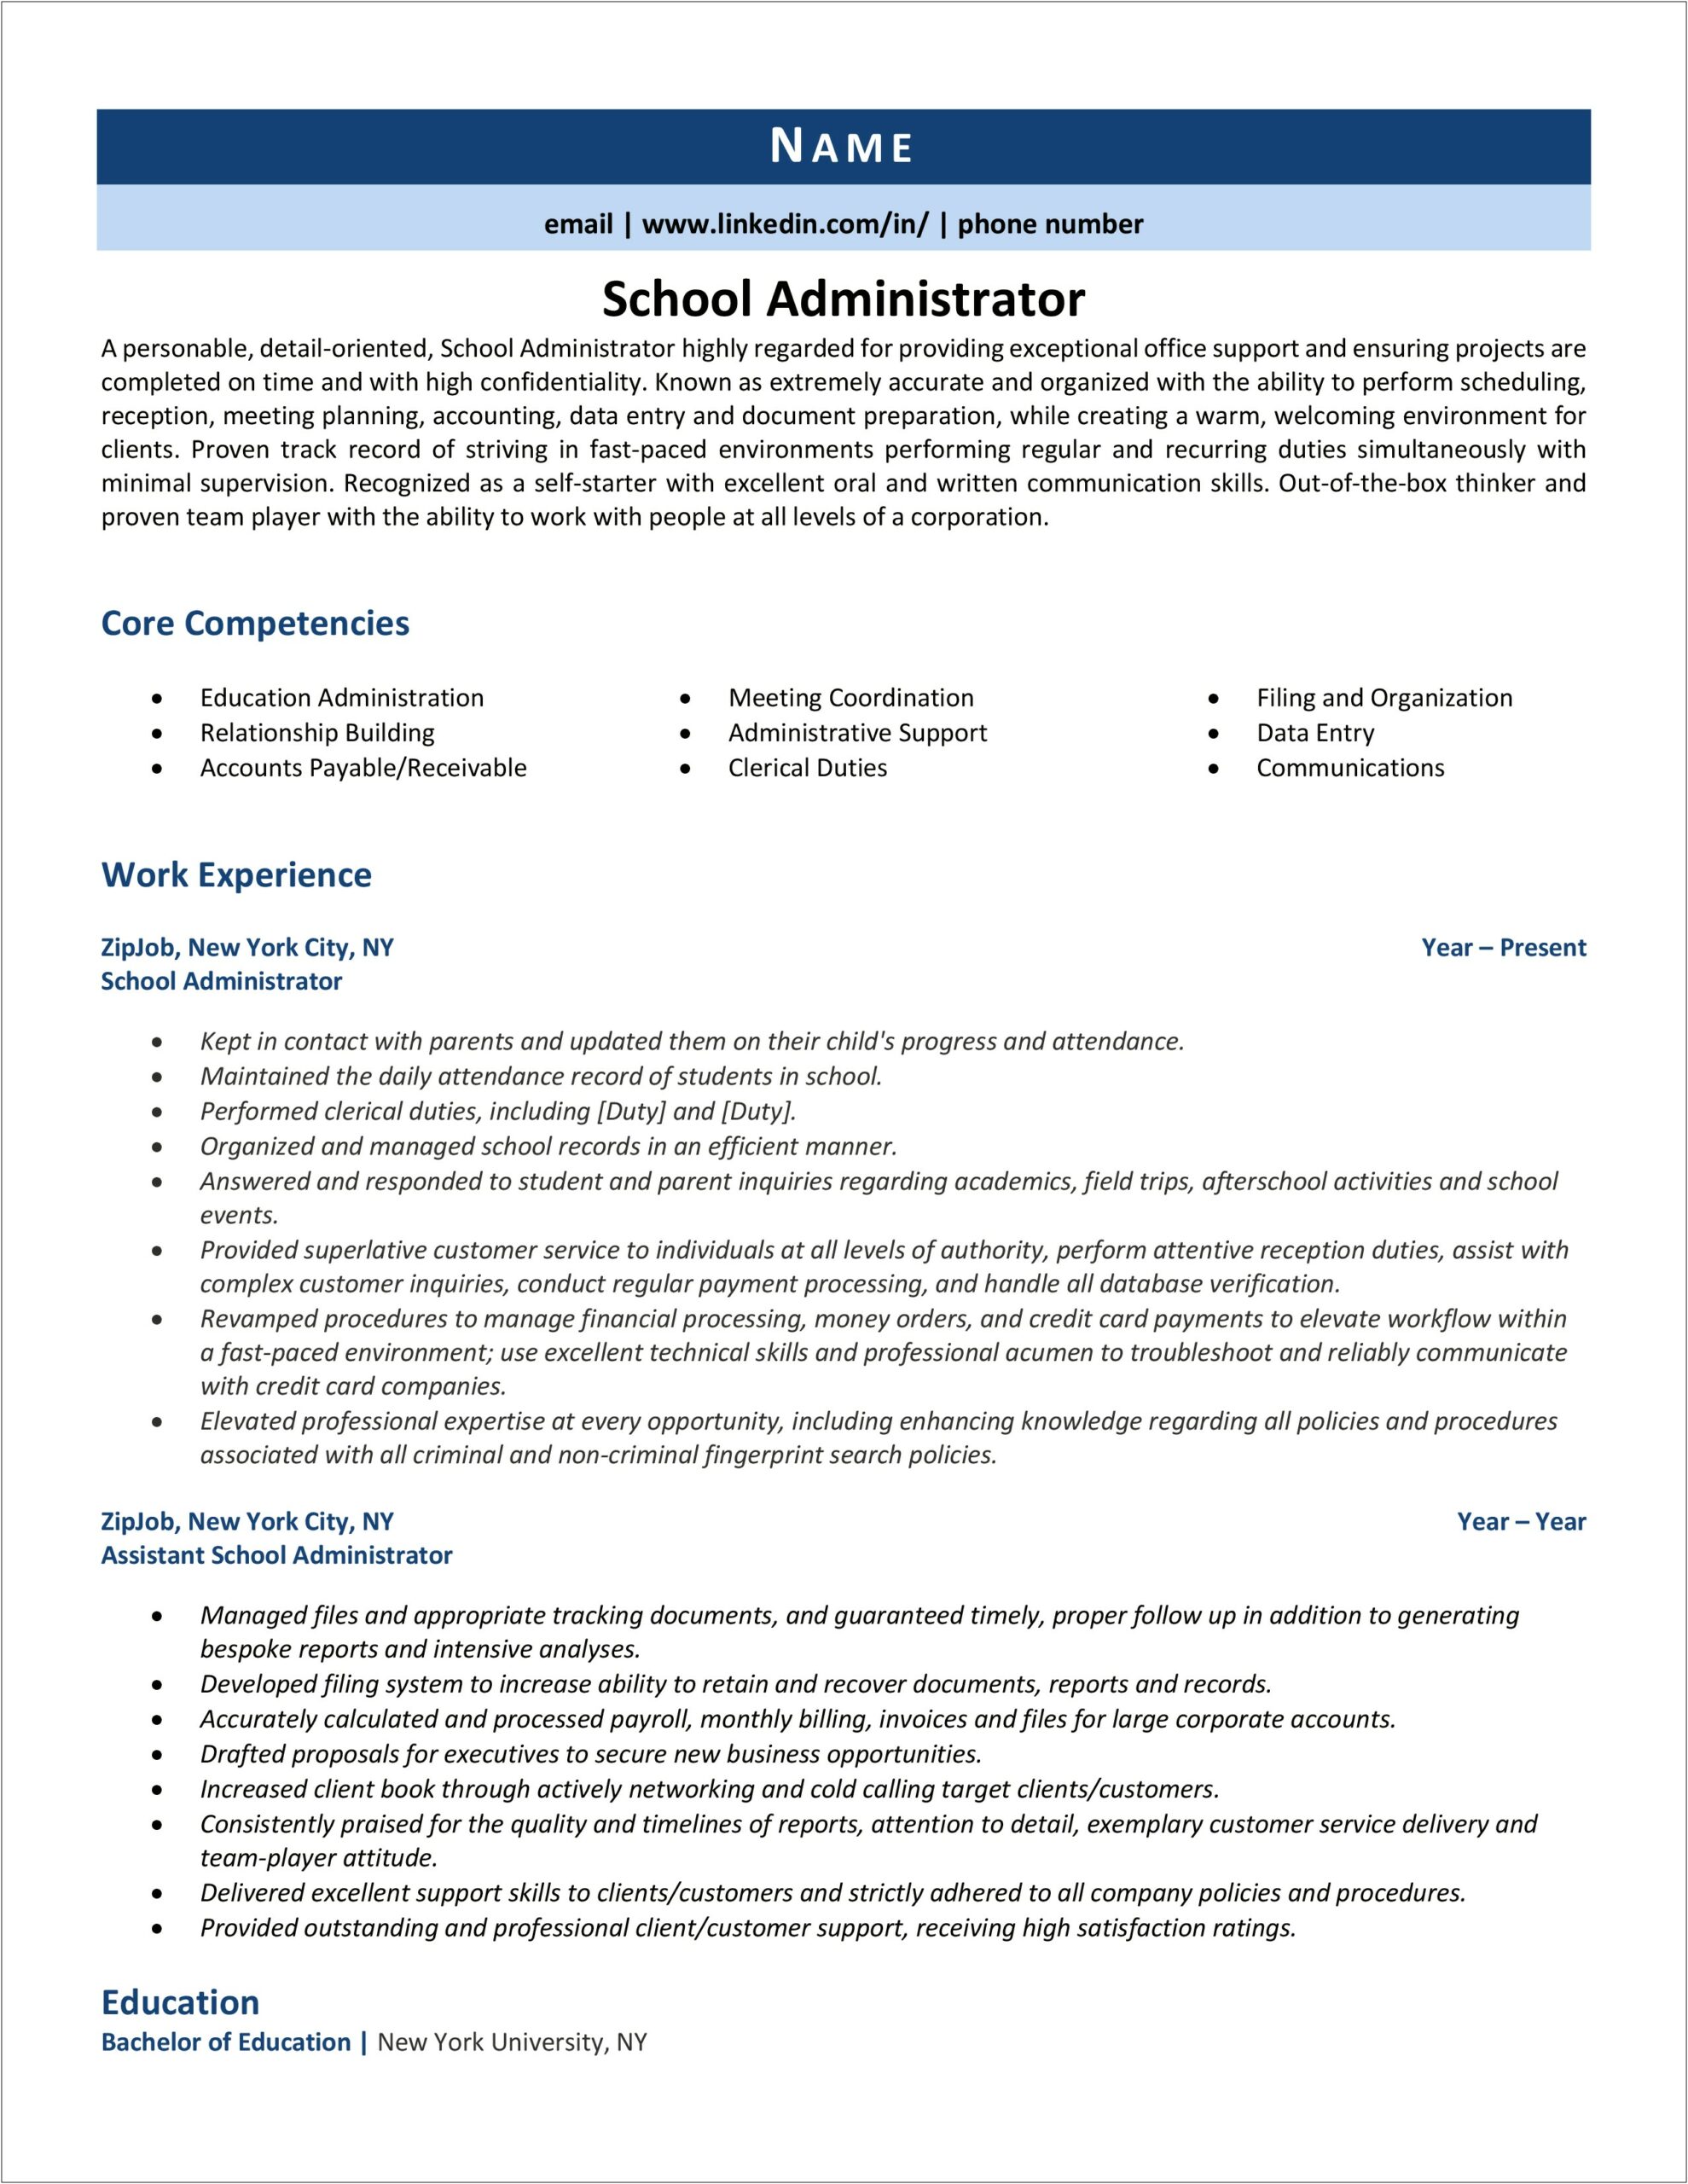 Sample Resumes For Education Administrators